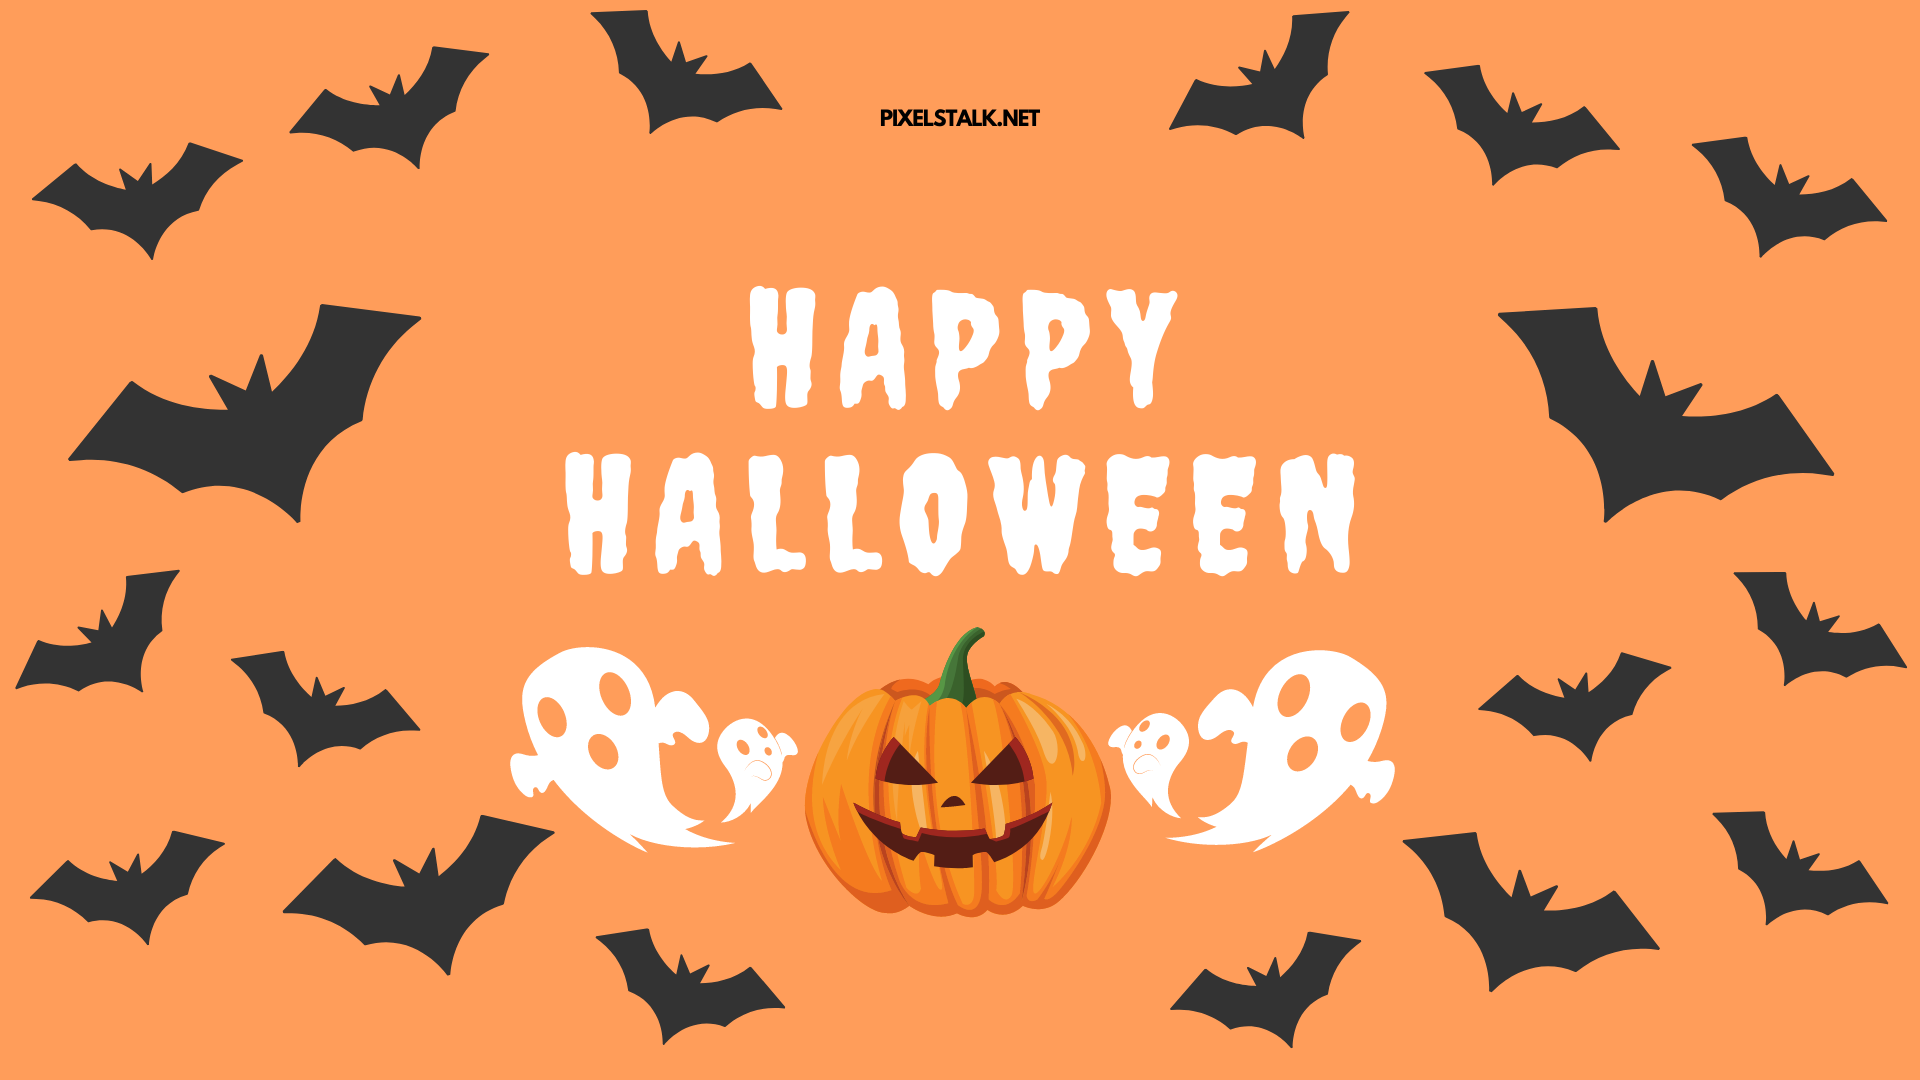 Happy Halloween 2021 Wallpapers HD free download 